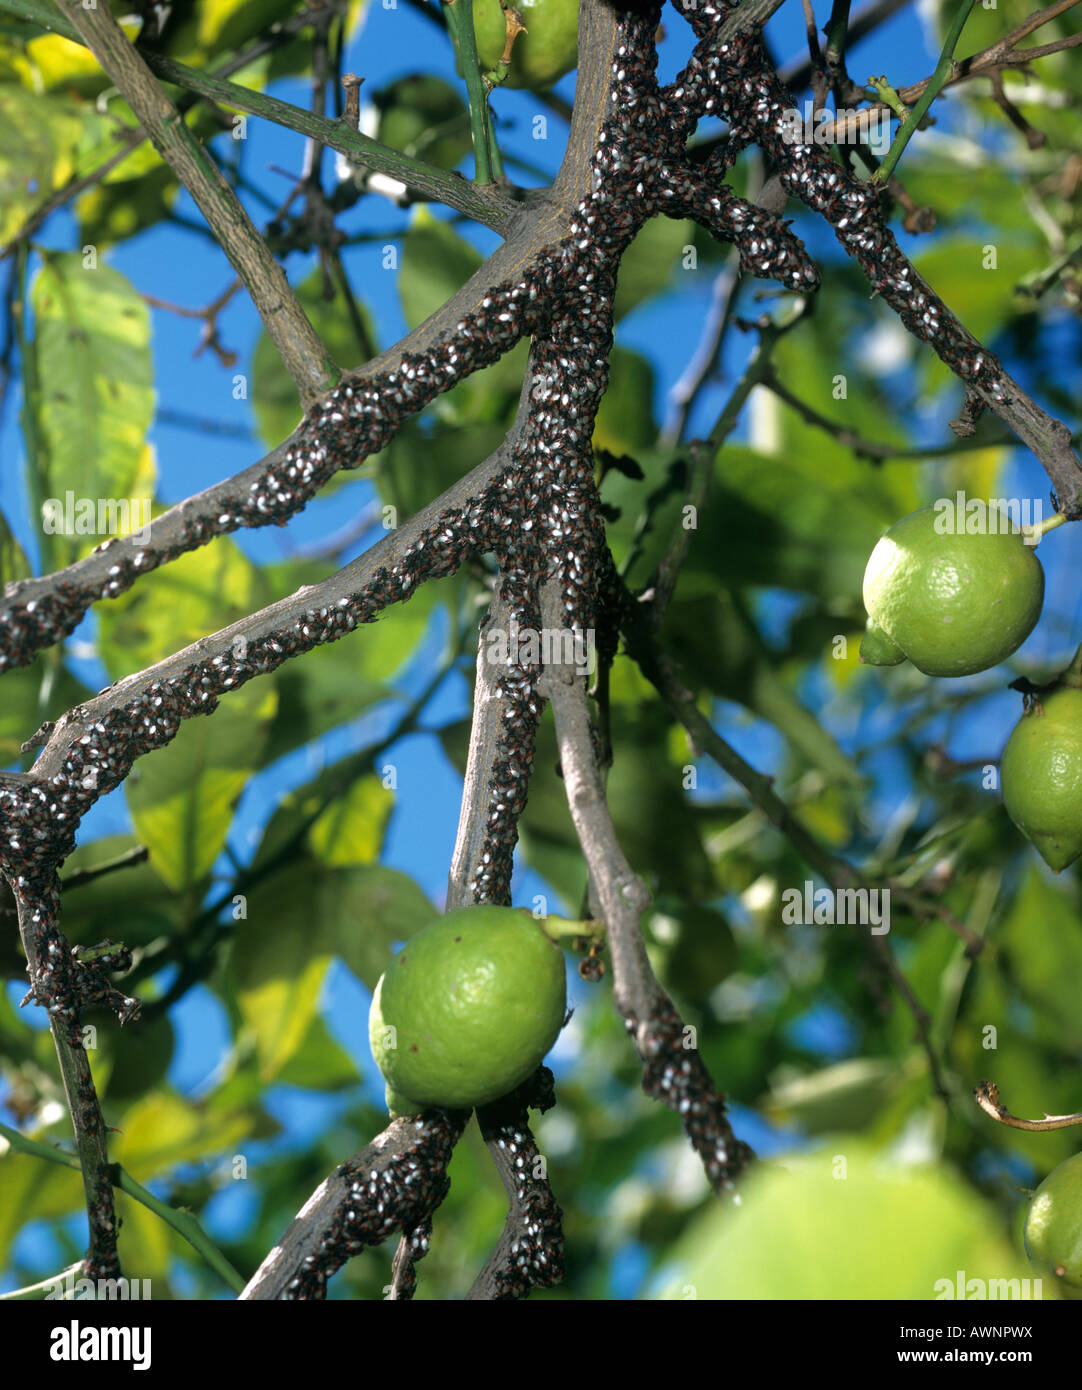 Masas de bichos Lygaeid Lygaeidae hibernando o se congregan en las ramas de un árbol de limón Foto de stock